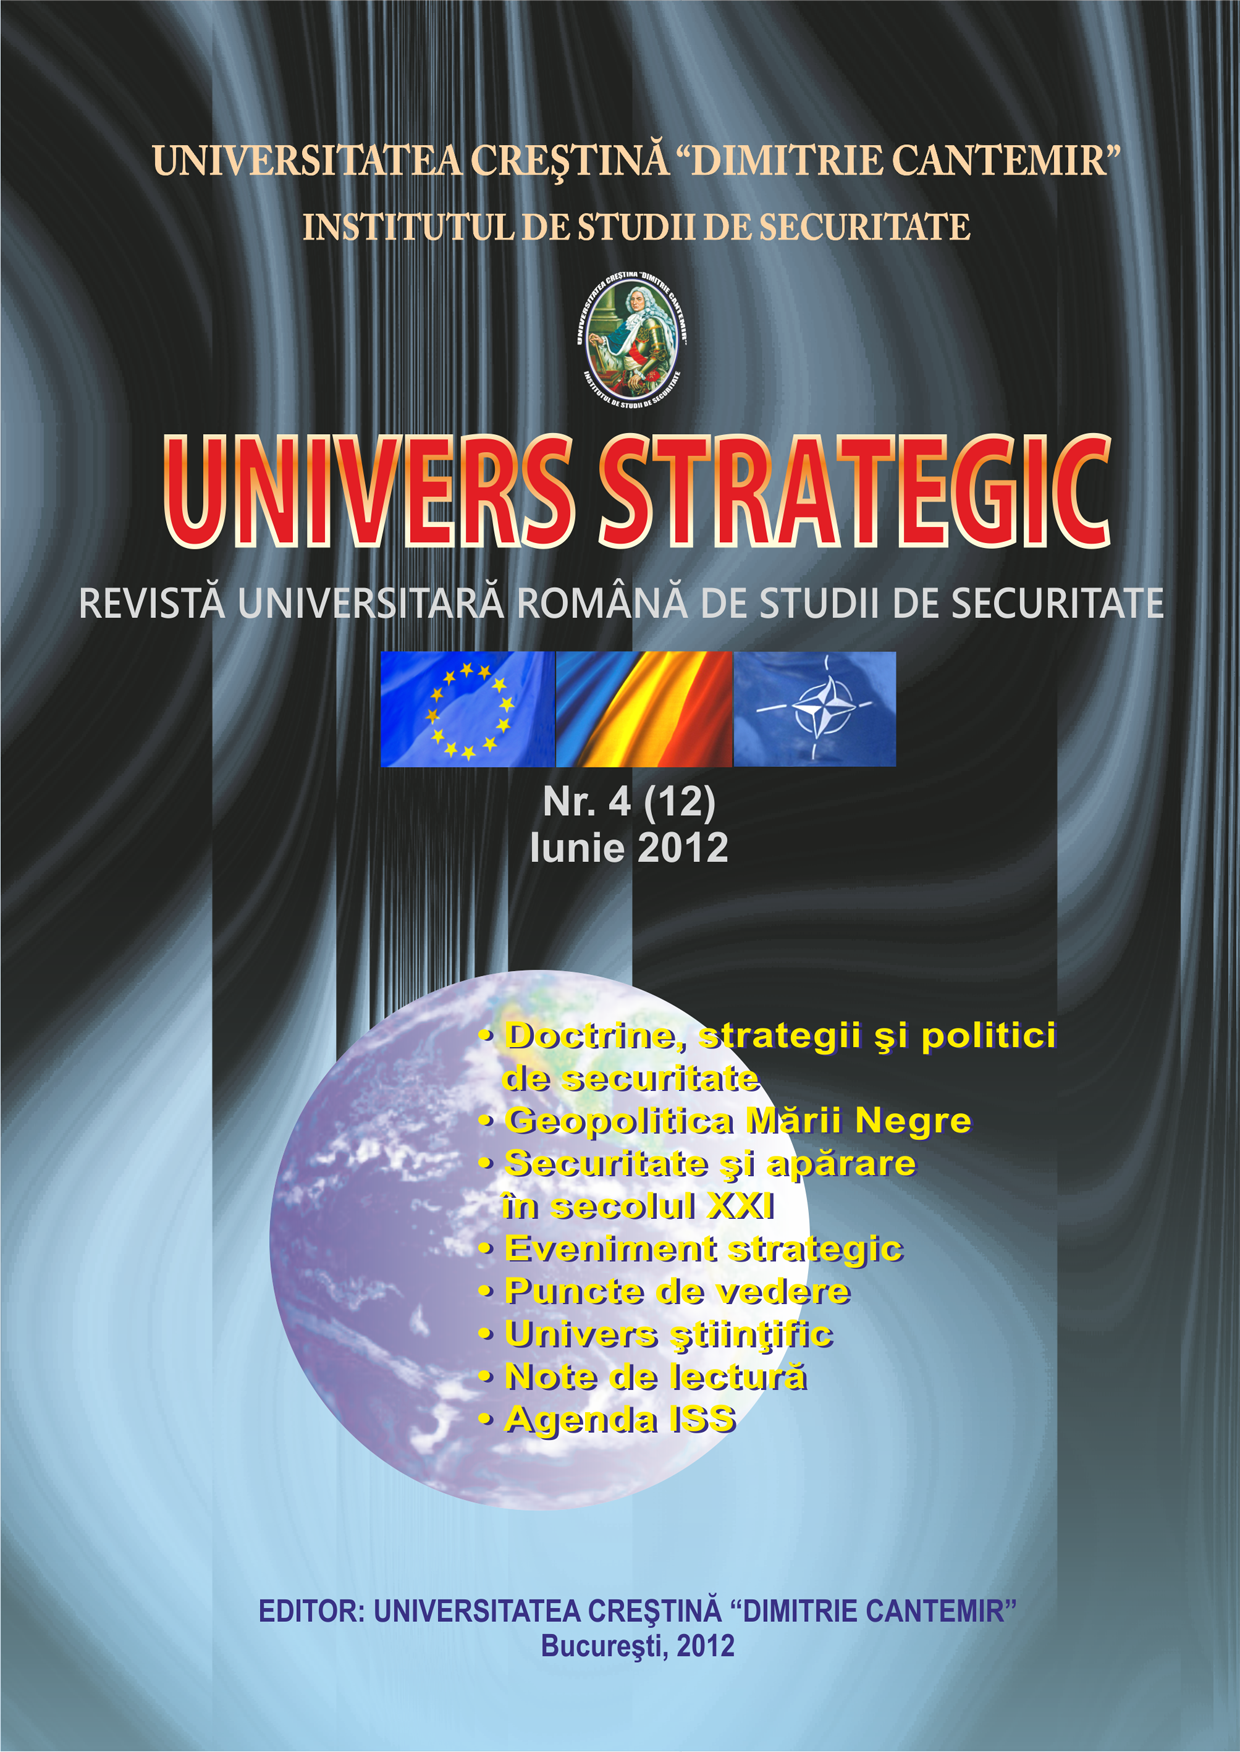 STRATEGIC UNIVERSE JOURNAL No. 13/2013 Integral Cover Image